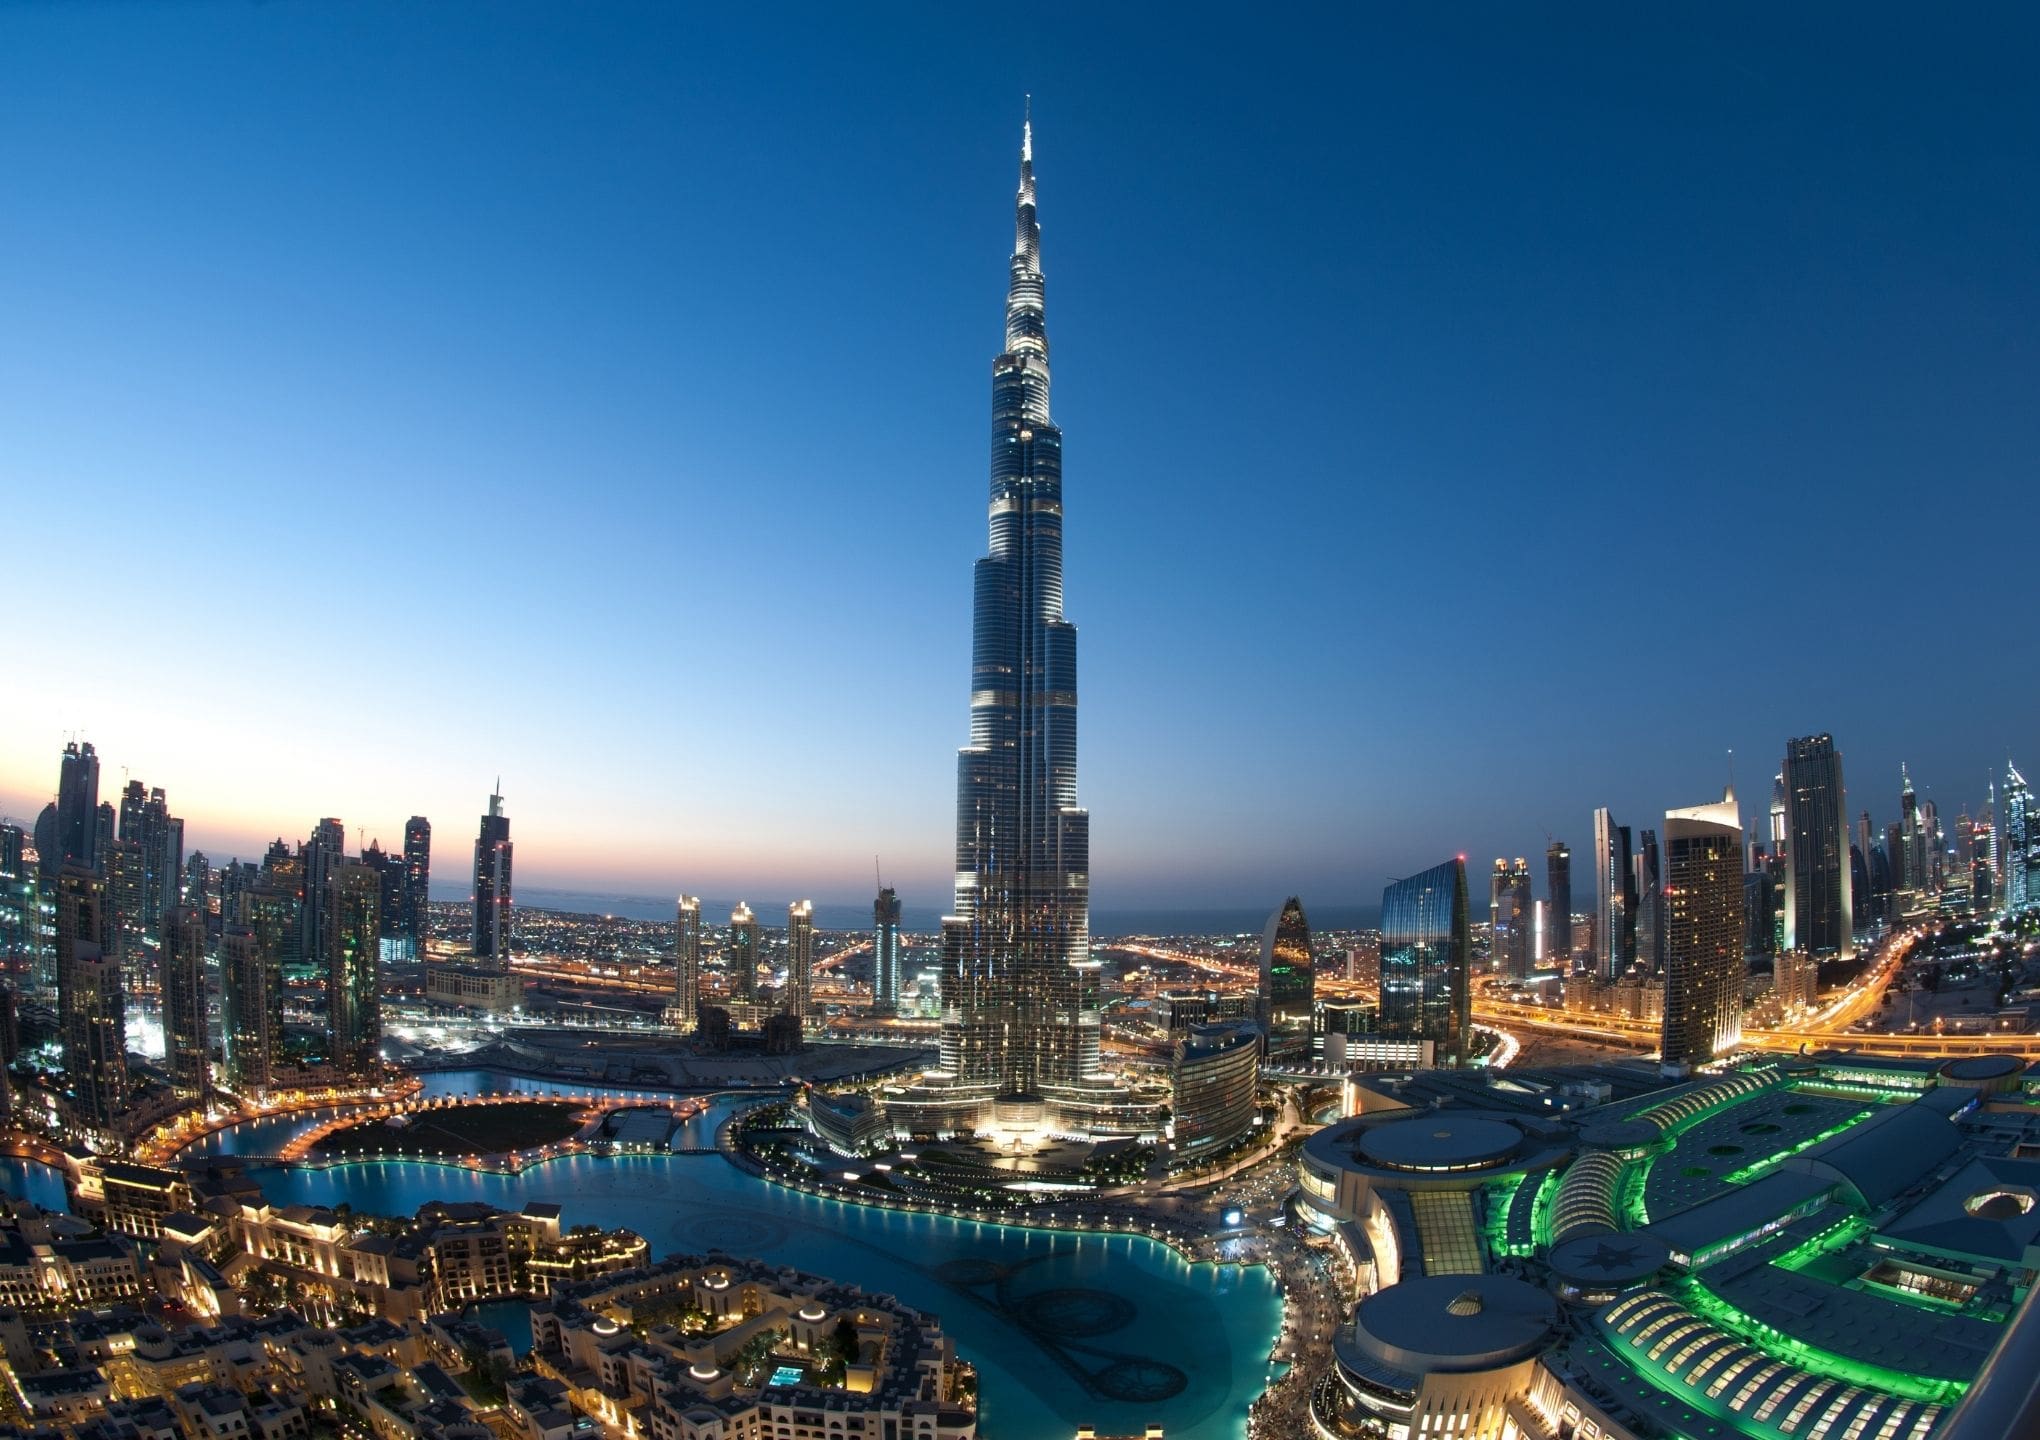 Dubai Studio City - skyscraper